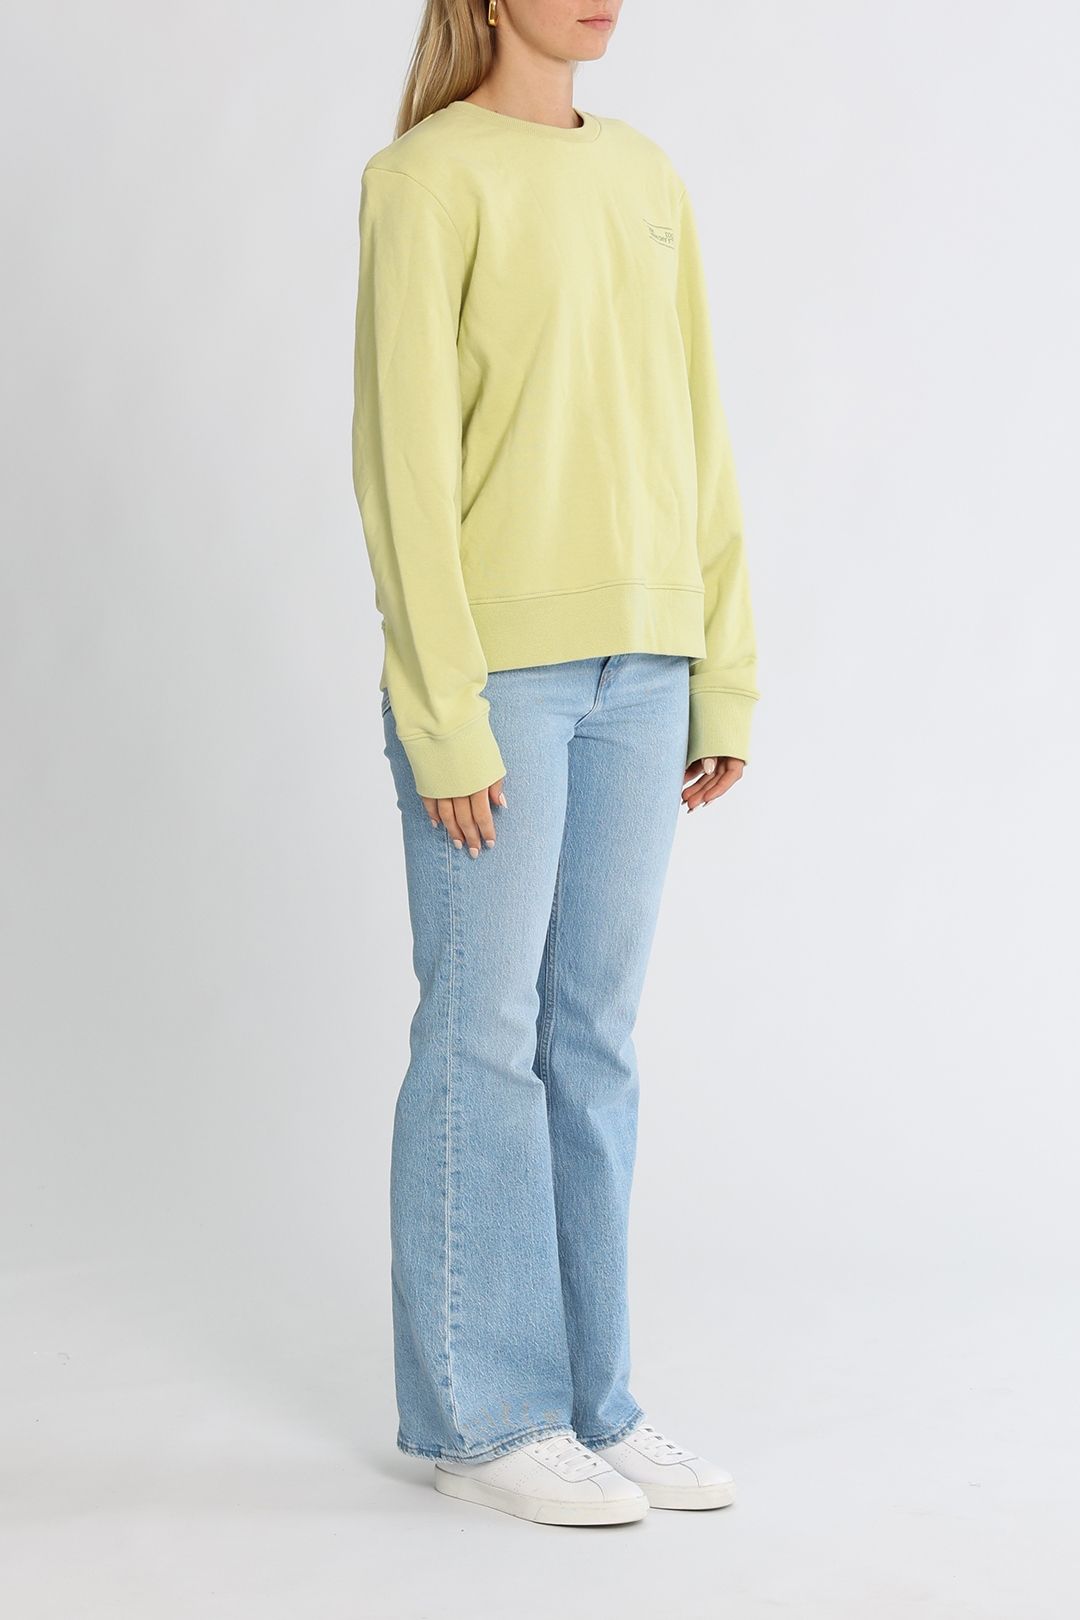 C&M Camilla and Marc Auburn Logo Sweater Sour Lemon Long Sleeves